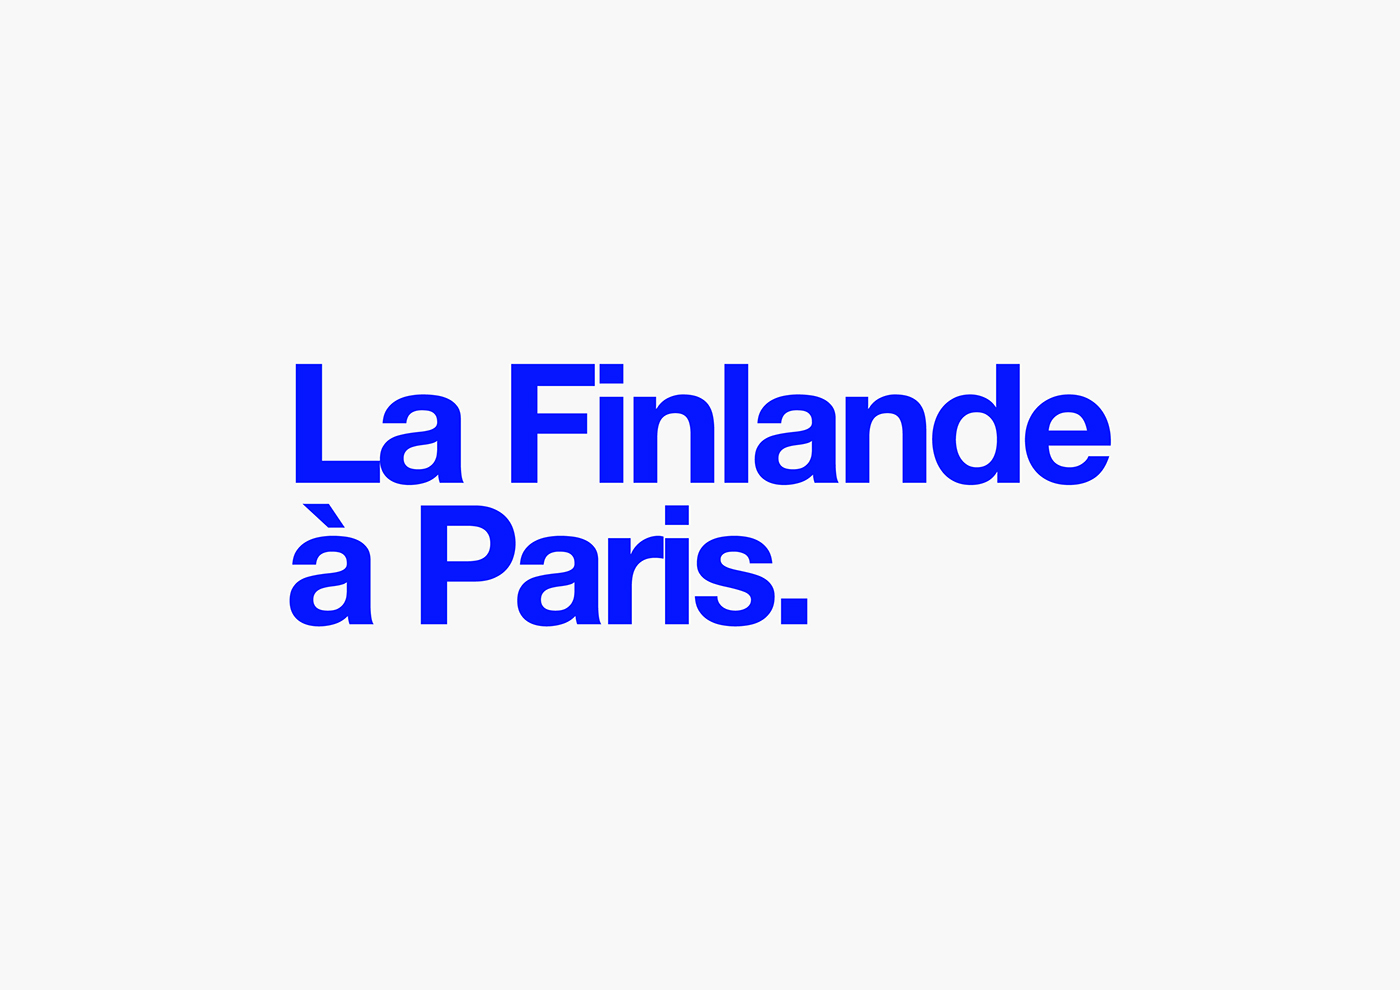 Finnish finland country culture design Coffee Paris institute identity